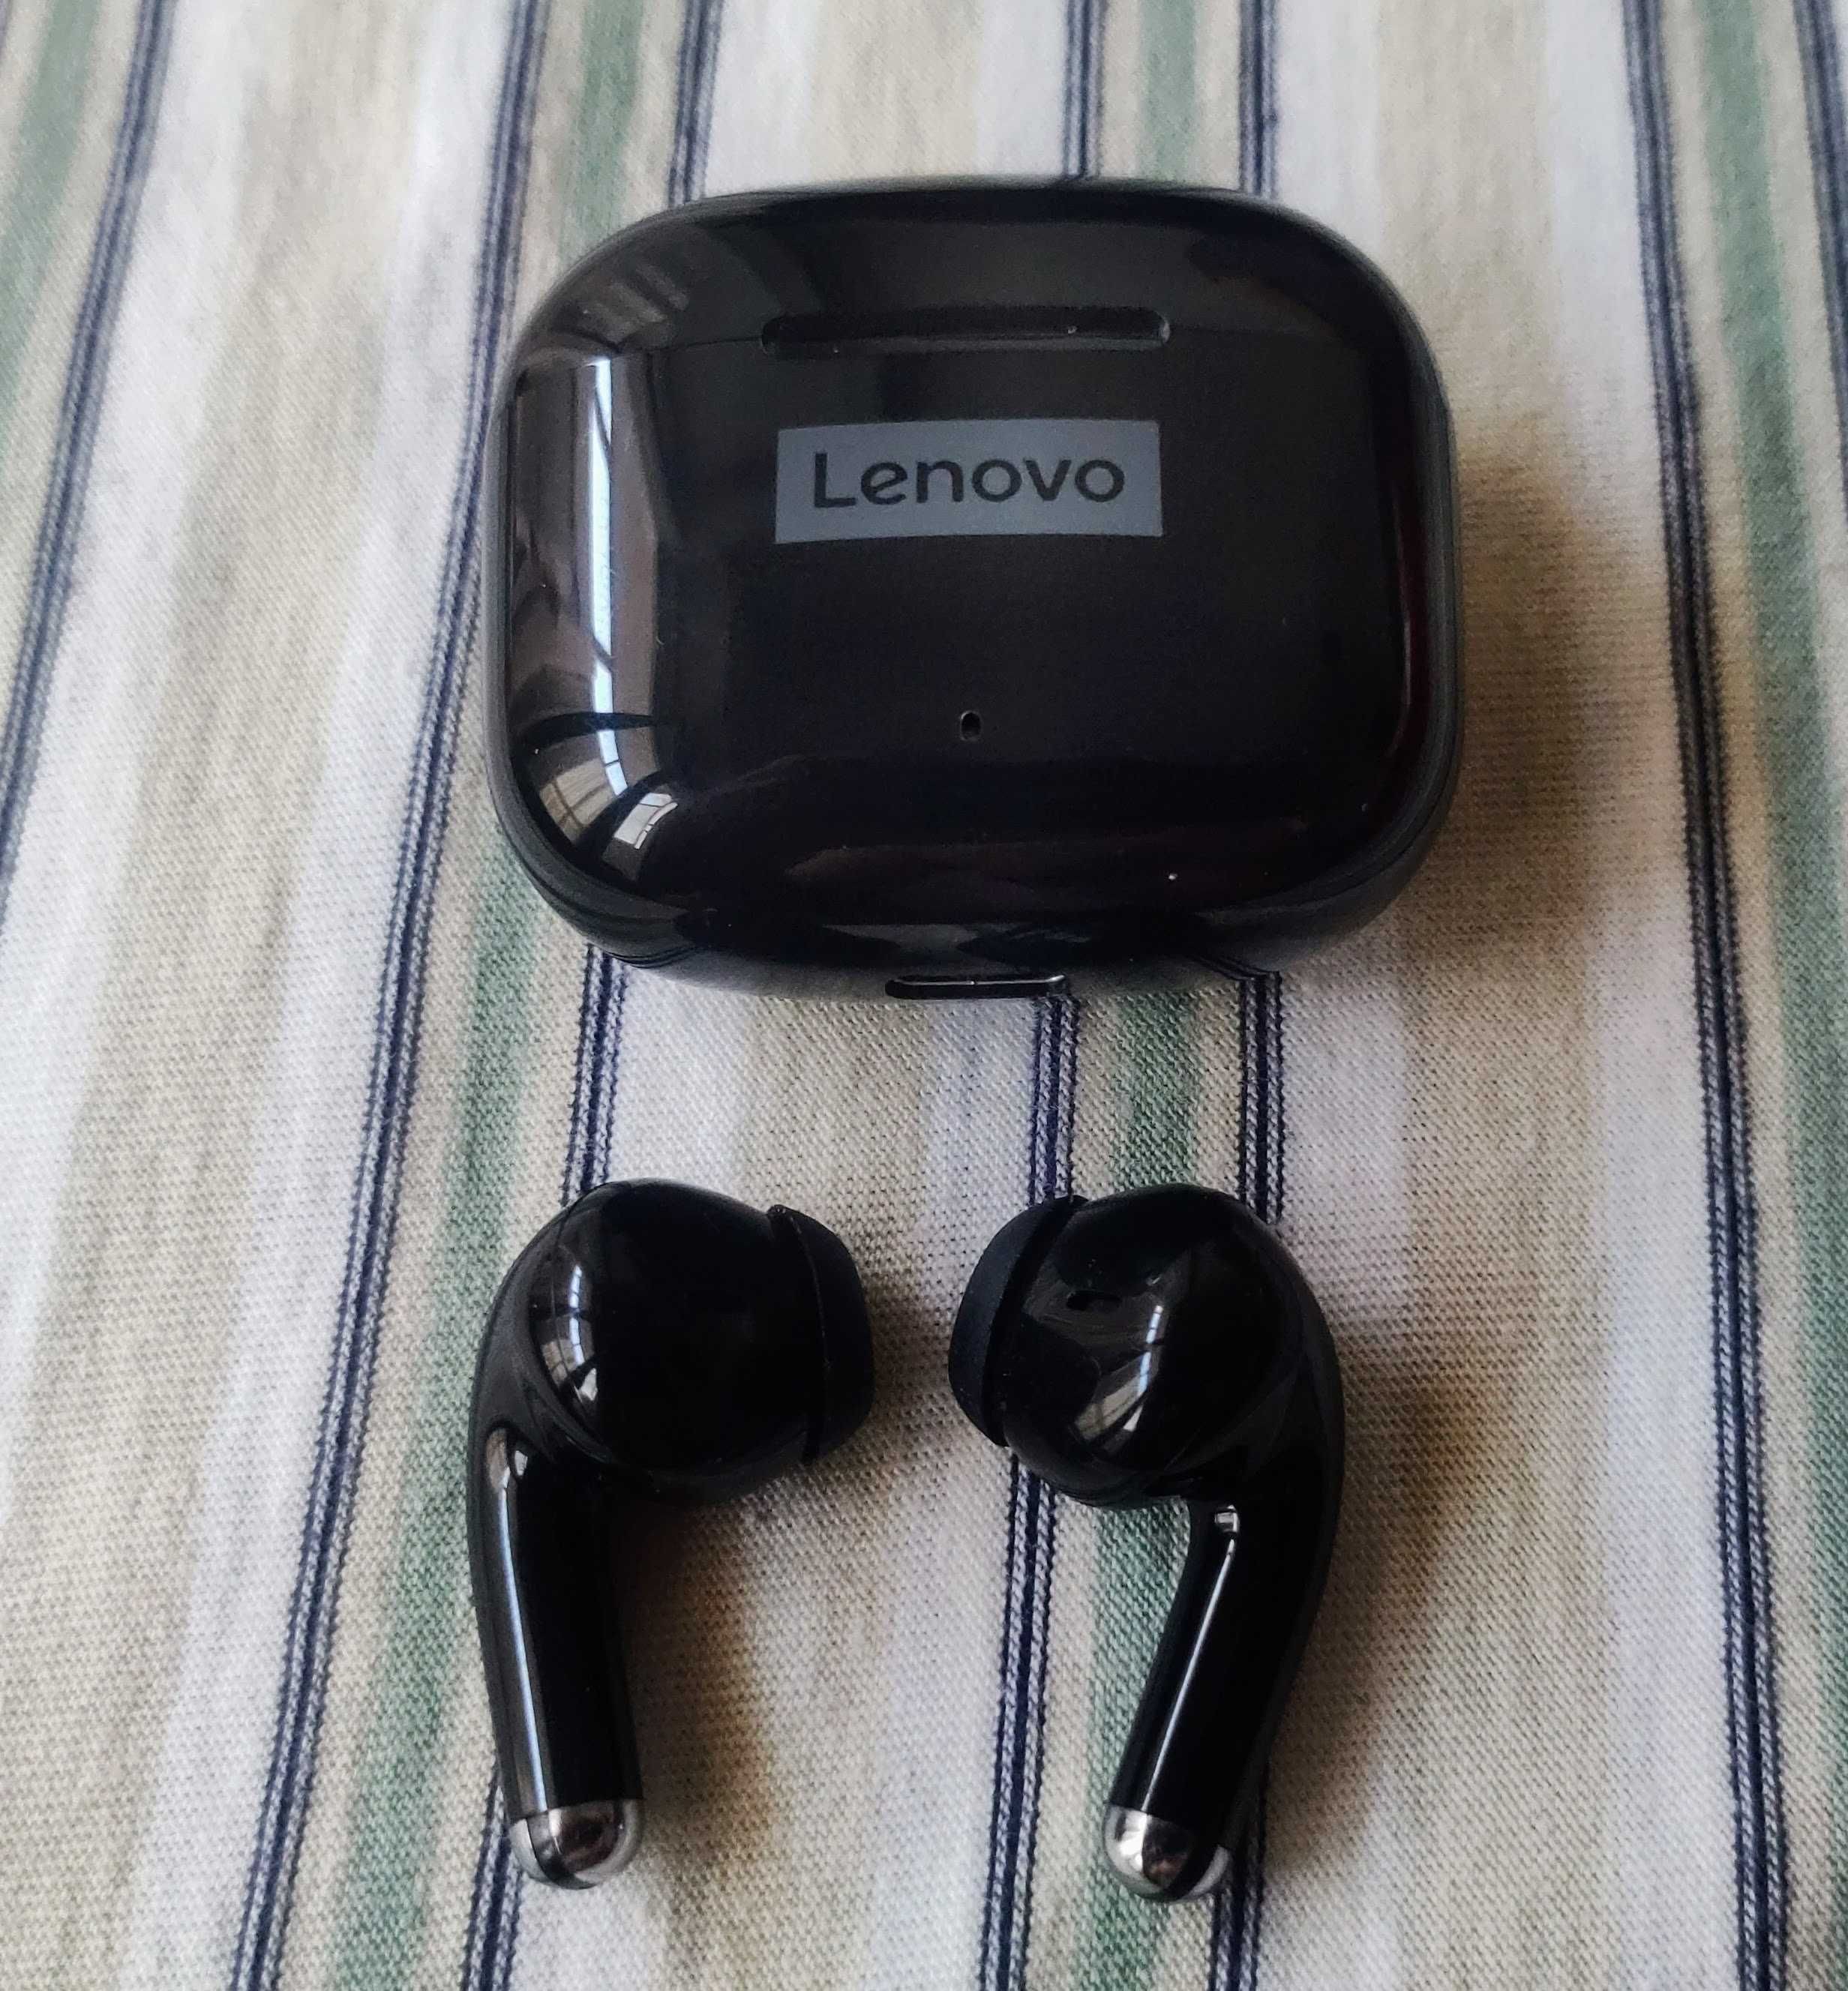 Auriculares in-ear bluetooth - Lenovo LP40 Pro